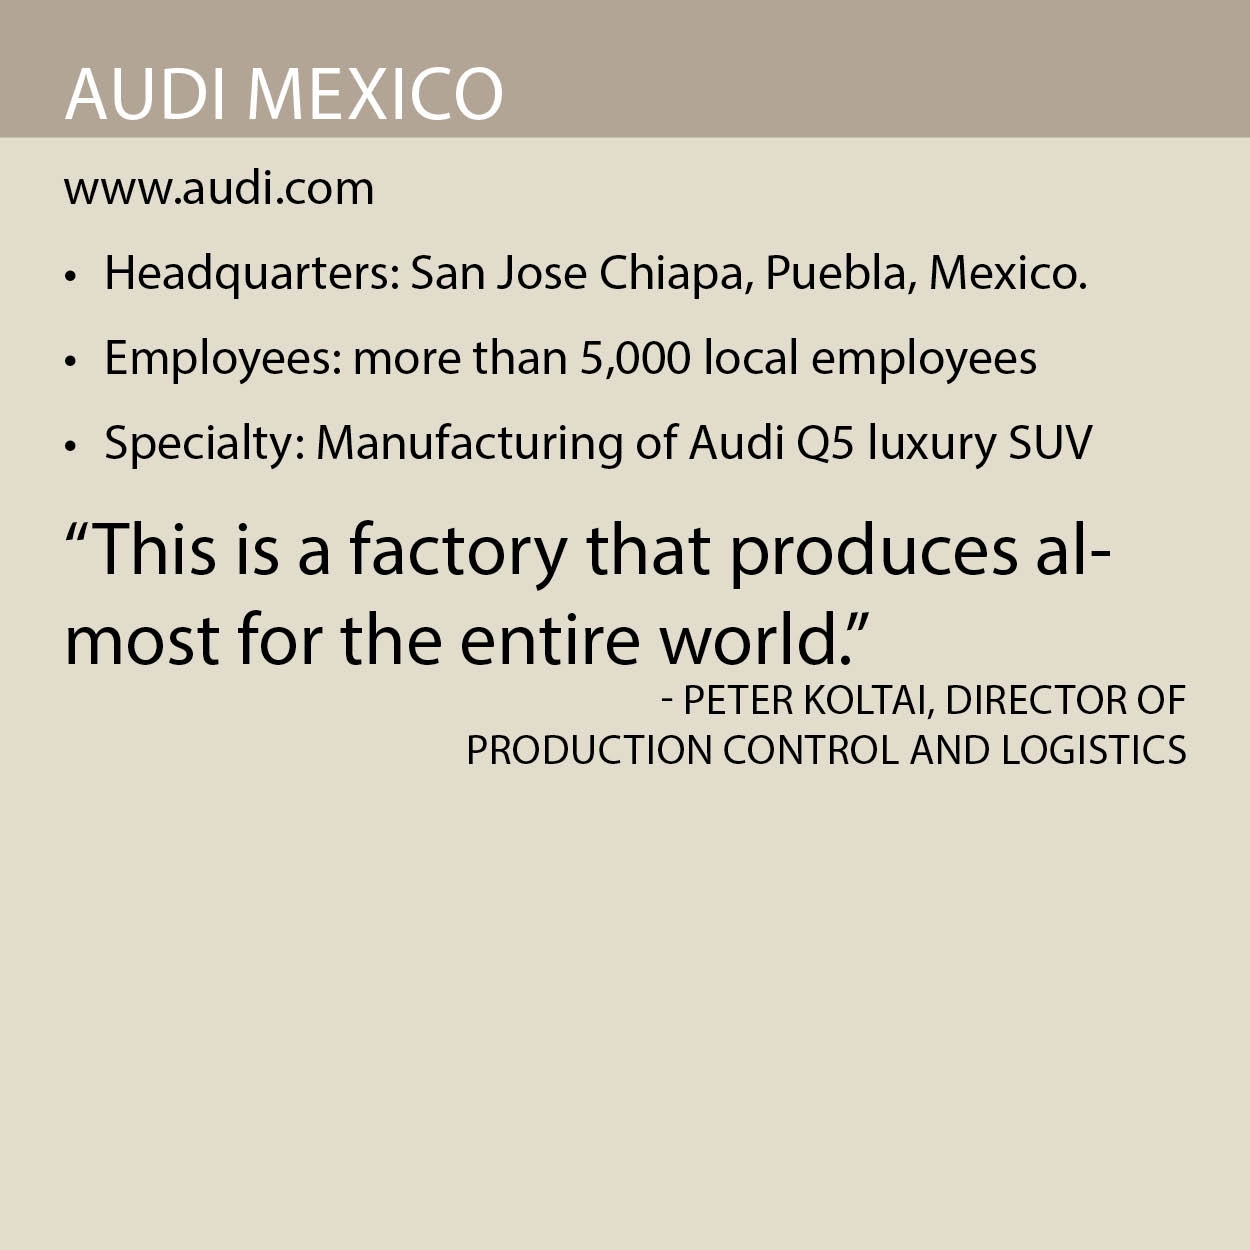 Audi Mexico fact box